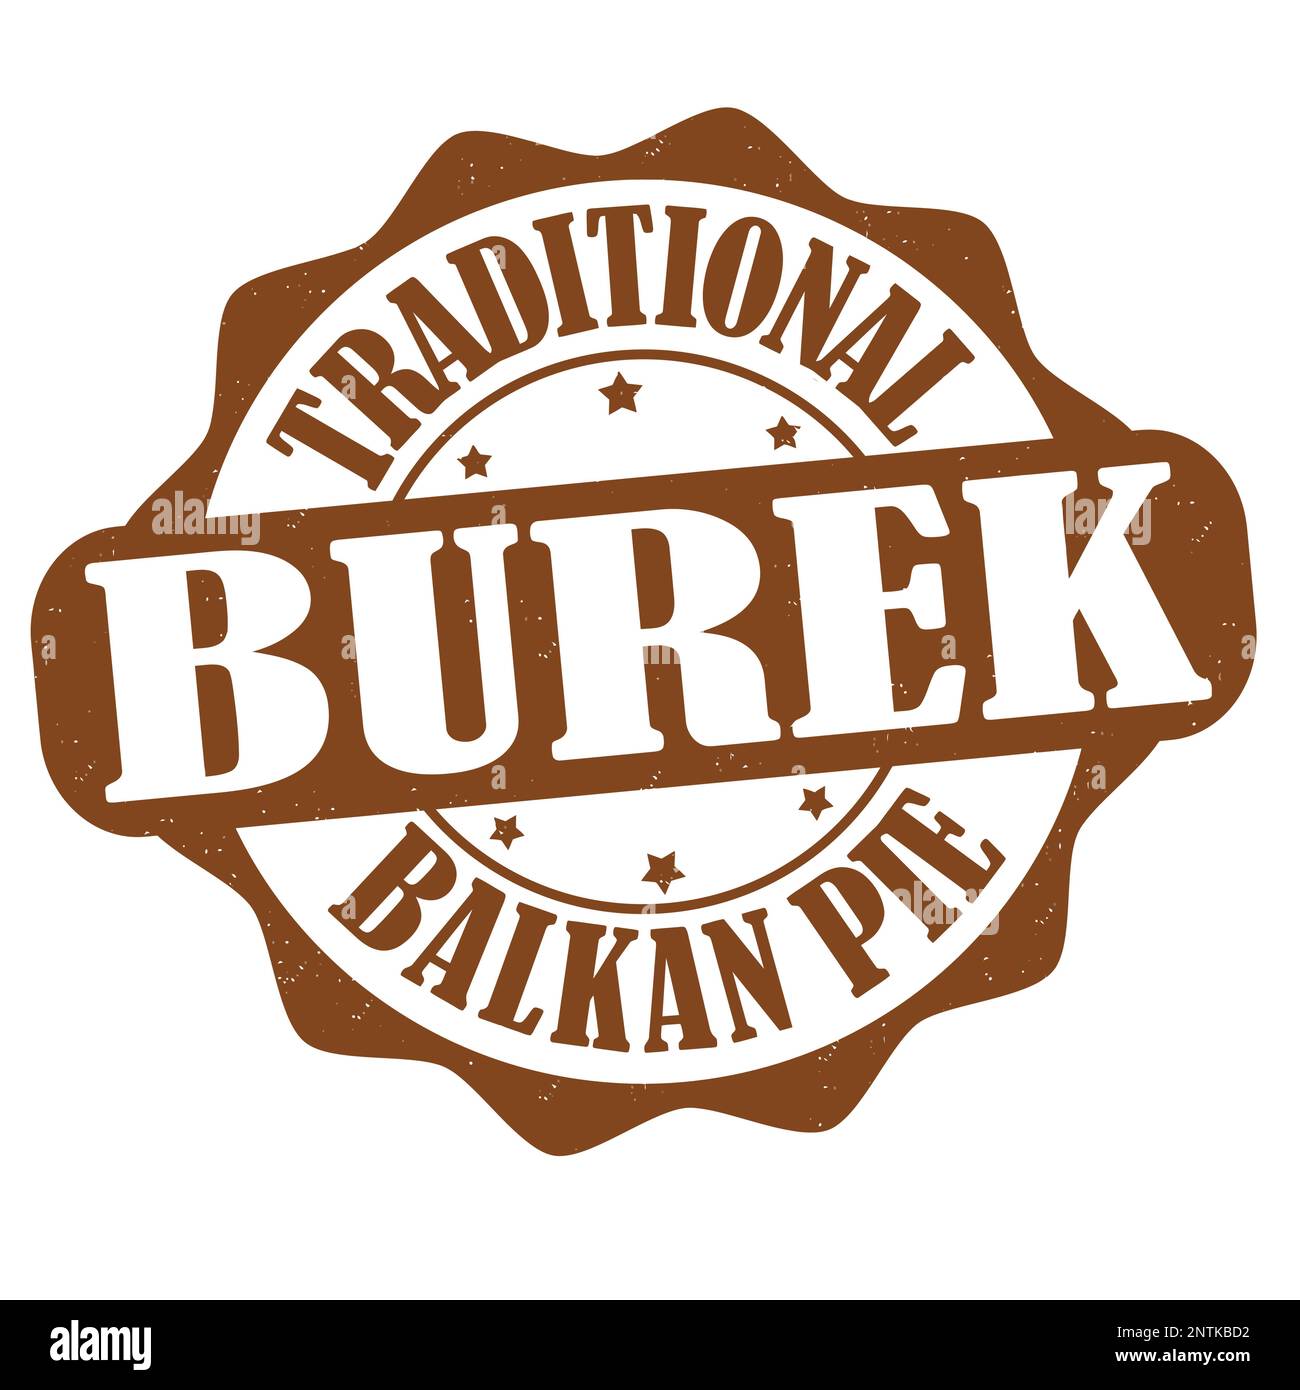 Burek label or stamp on white background, vector illustration Stock Vector